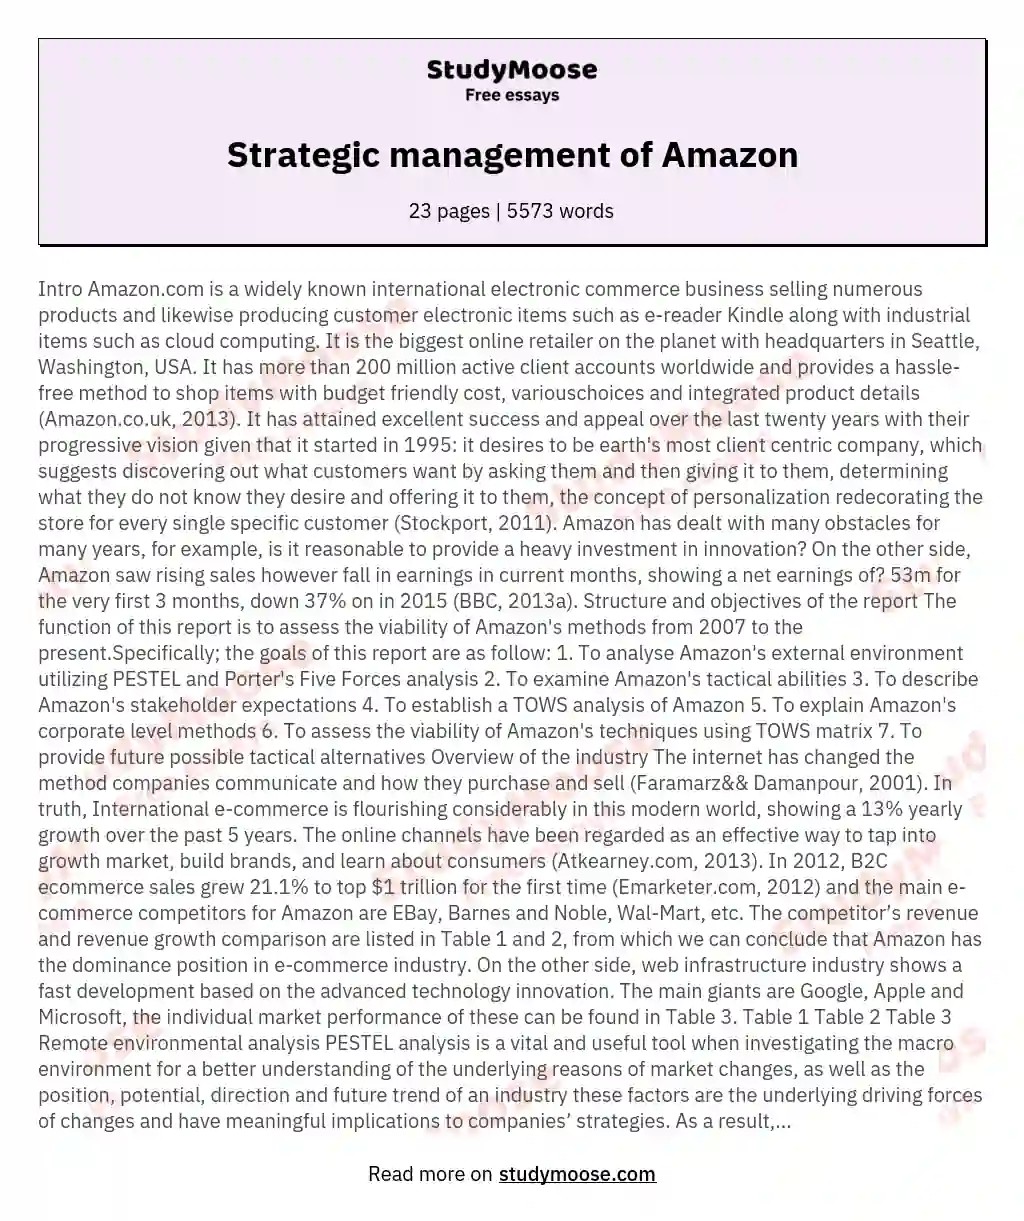 Strategic management of Amazon essay